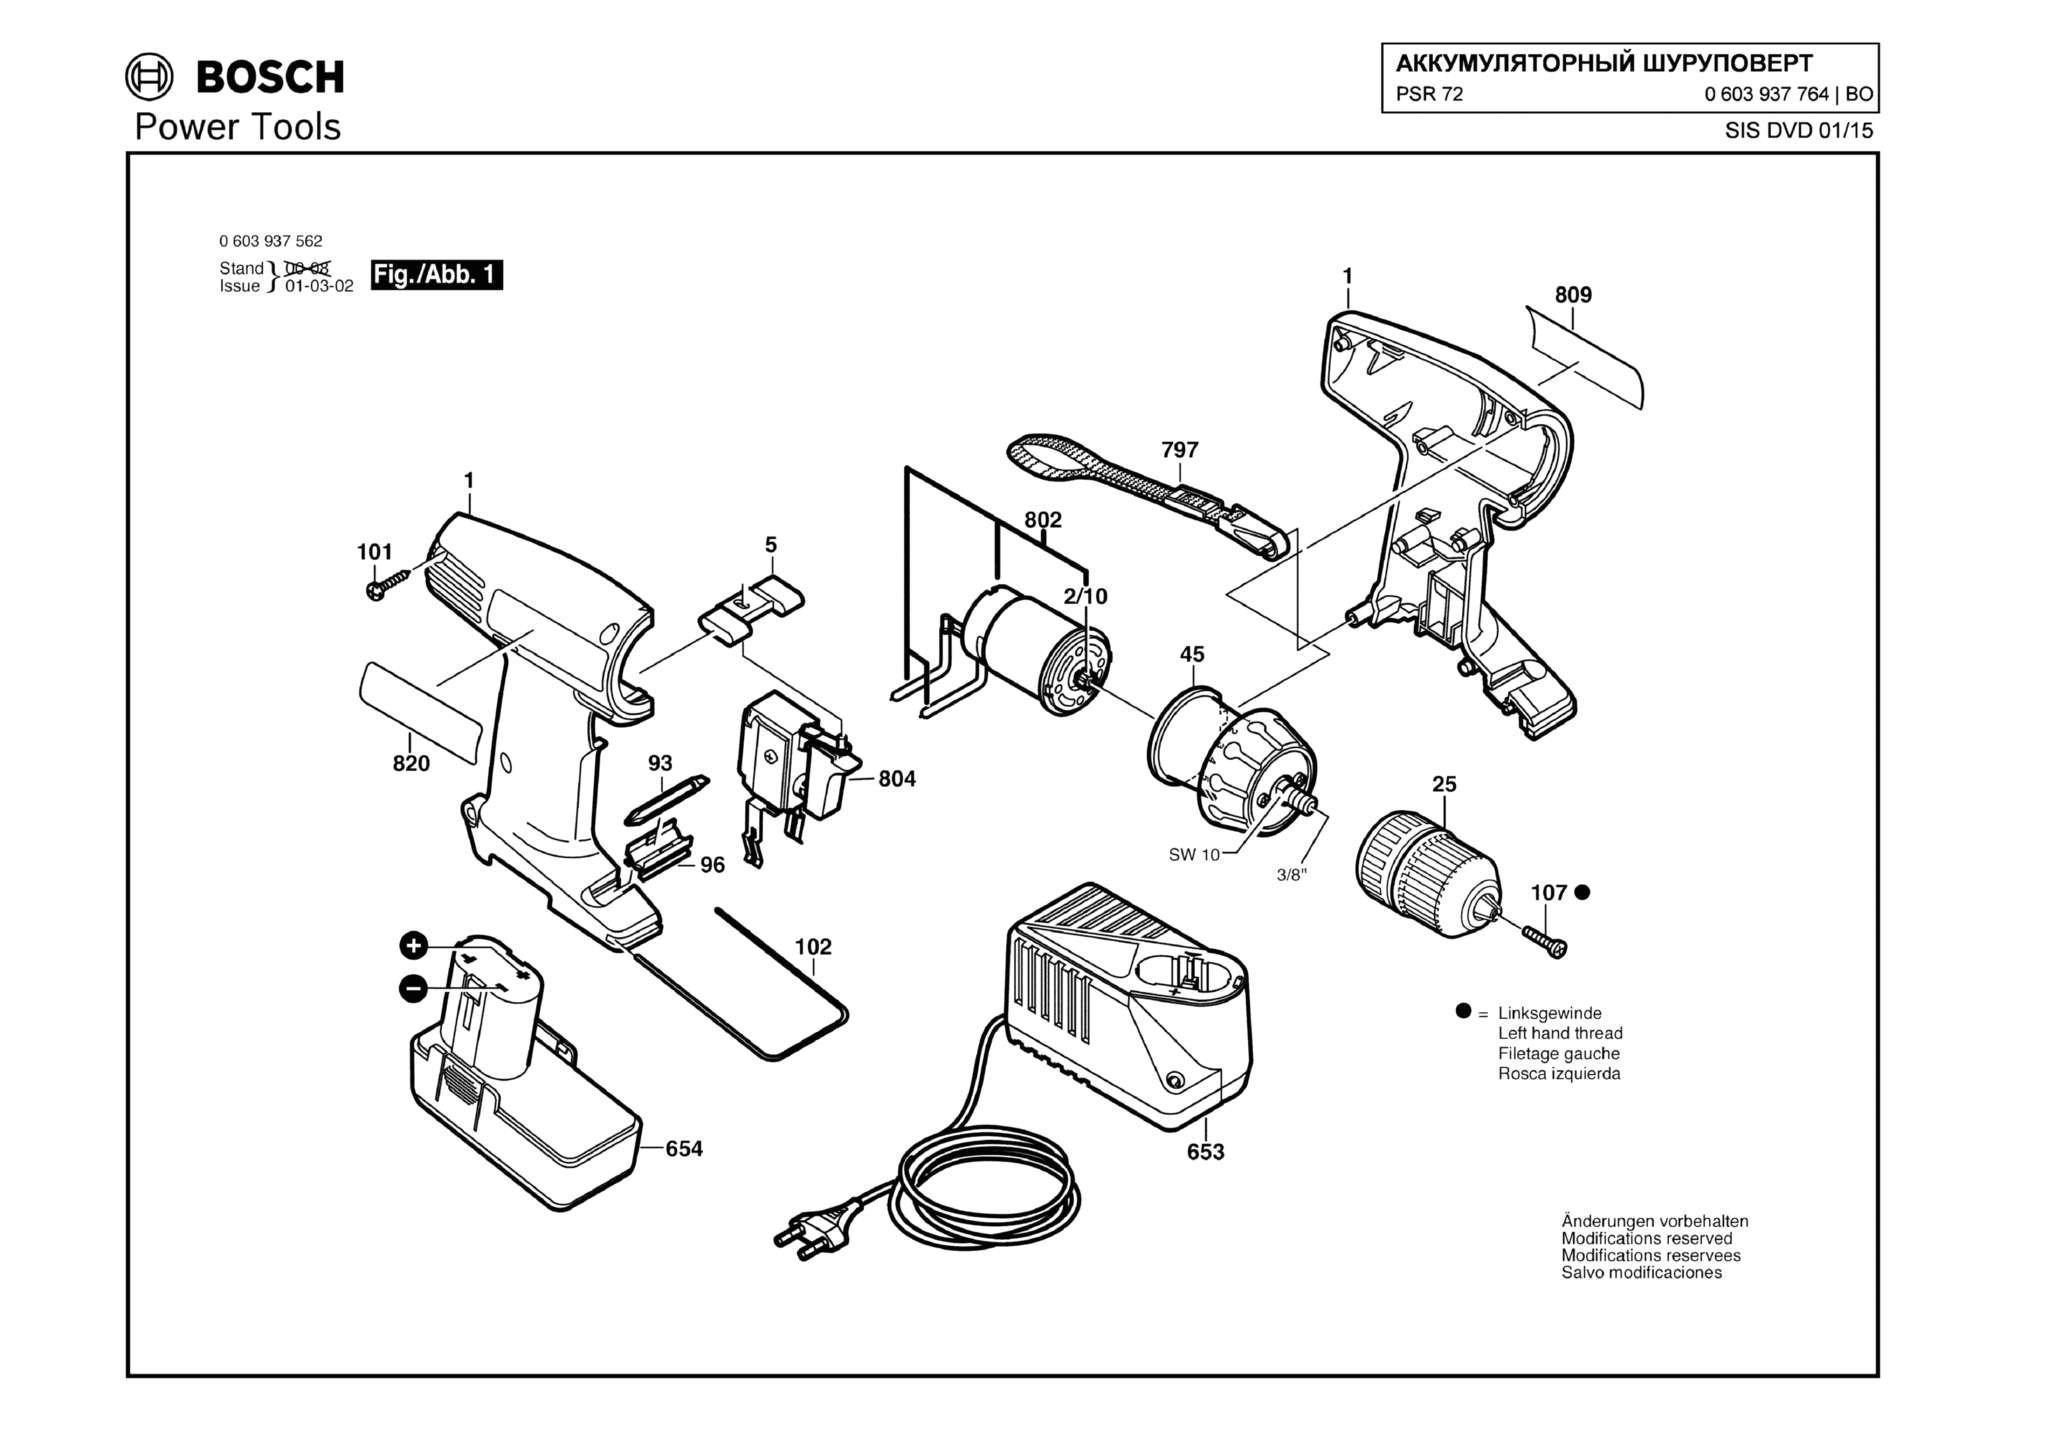 Запчасти, схема и деталировка Bosch PSR 72 (ТИП 0603937764)